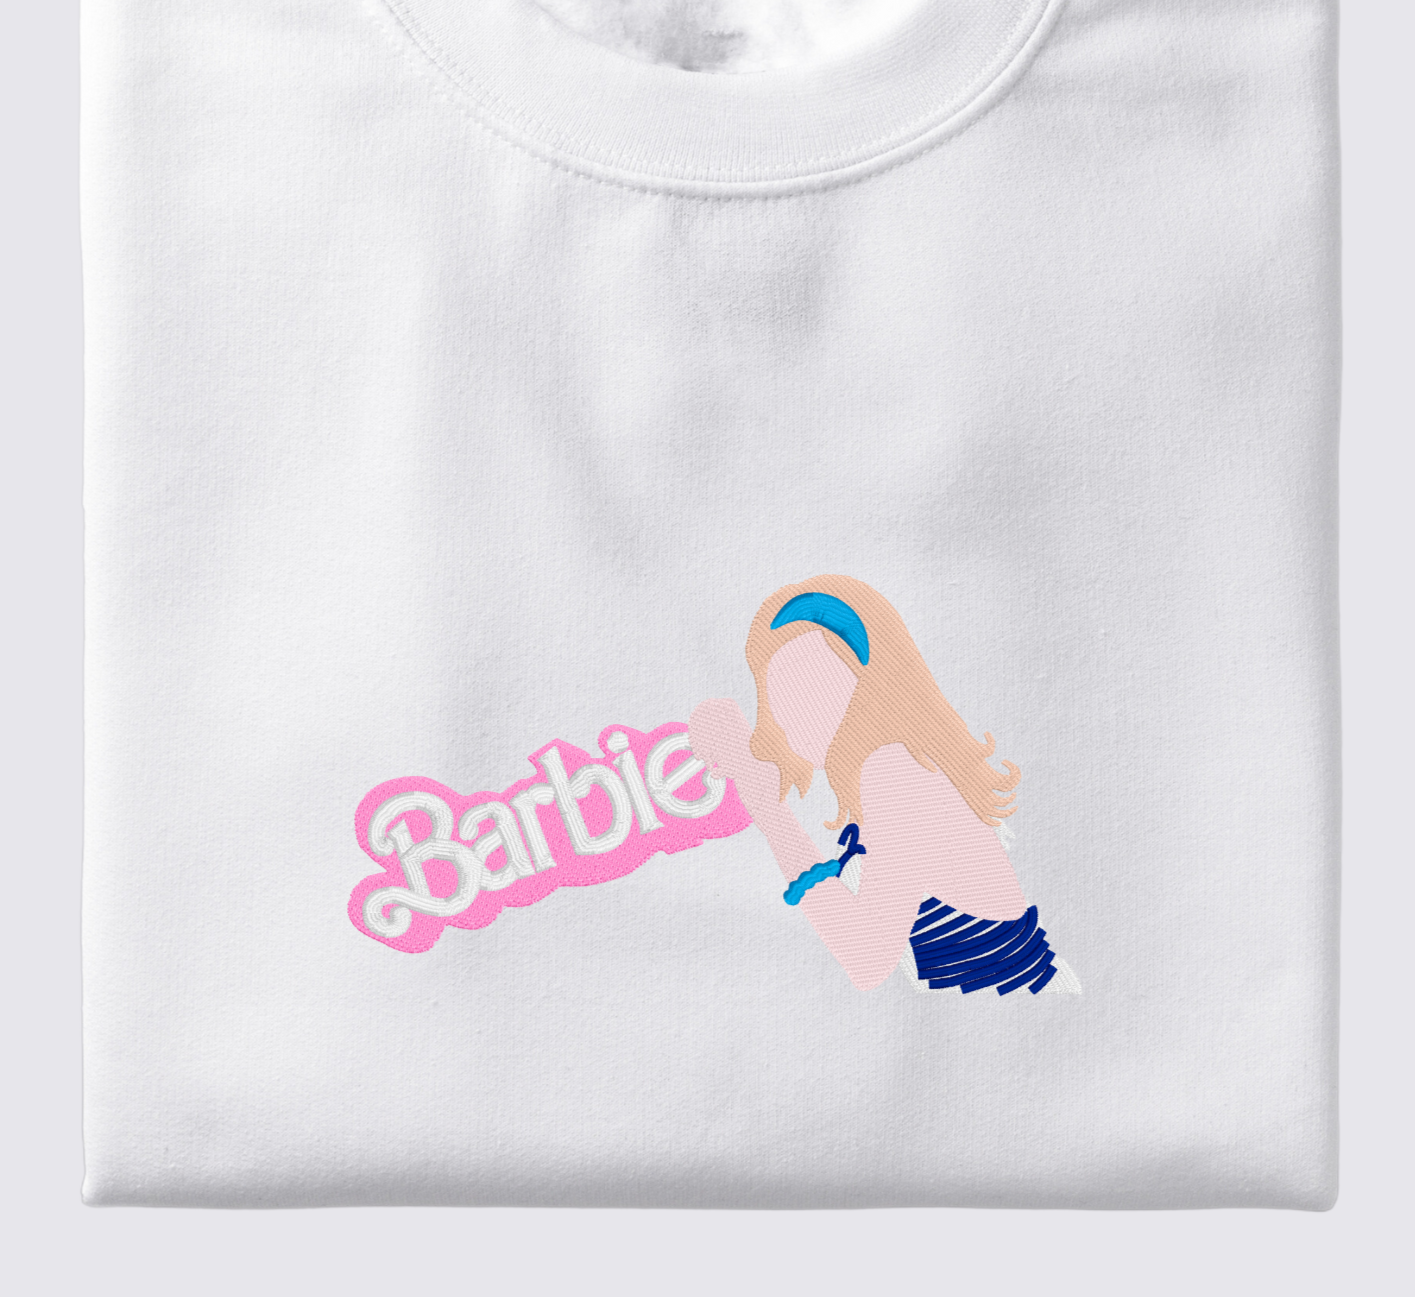 Barbie Movie Sweatshirt